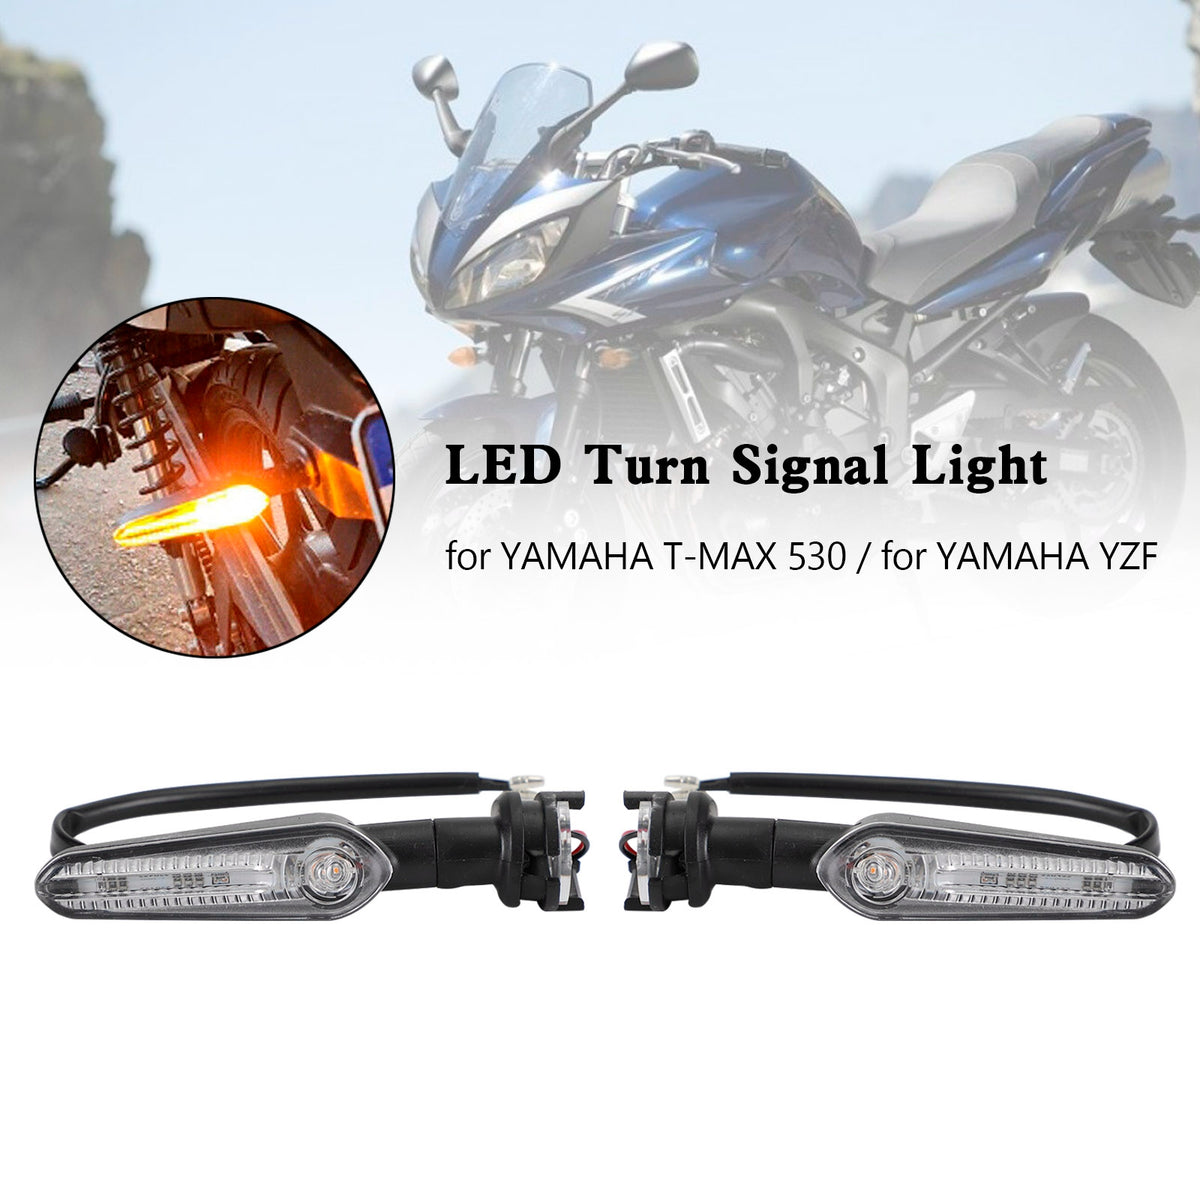 LED Refraction Blinker Turn Signal Light For YAMAHA MT-25 MT-03 MT-07 MT-09 T7